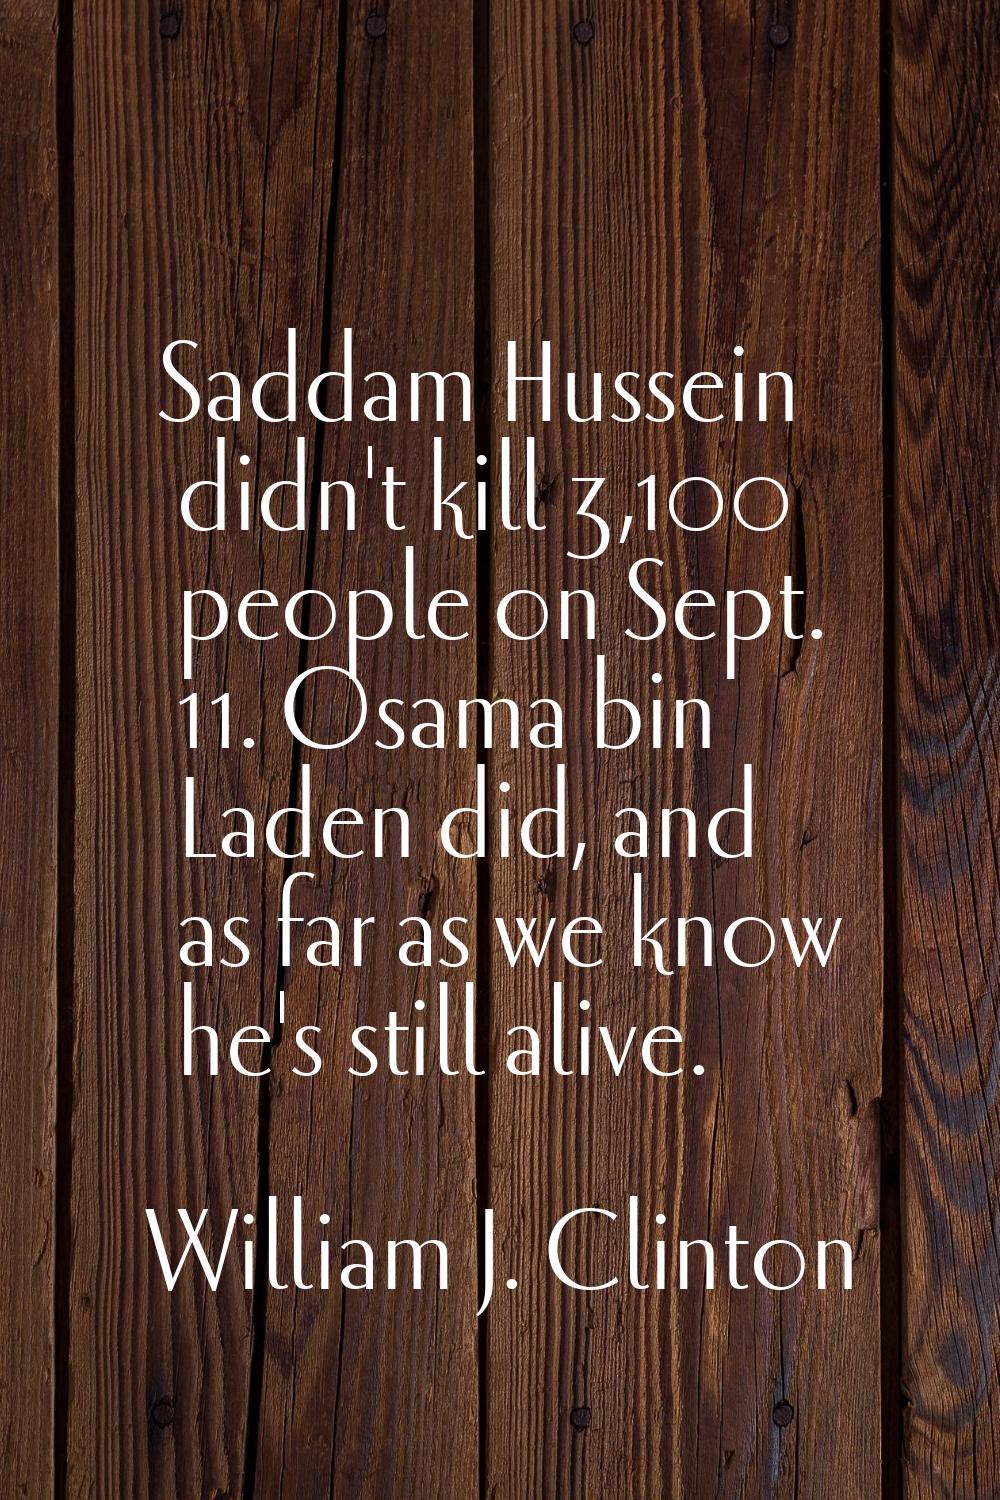 Saddam Hussein didn't kill 3,100 people on Sept. 11. Osama bin Laden did, and as far as we know he'